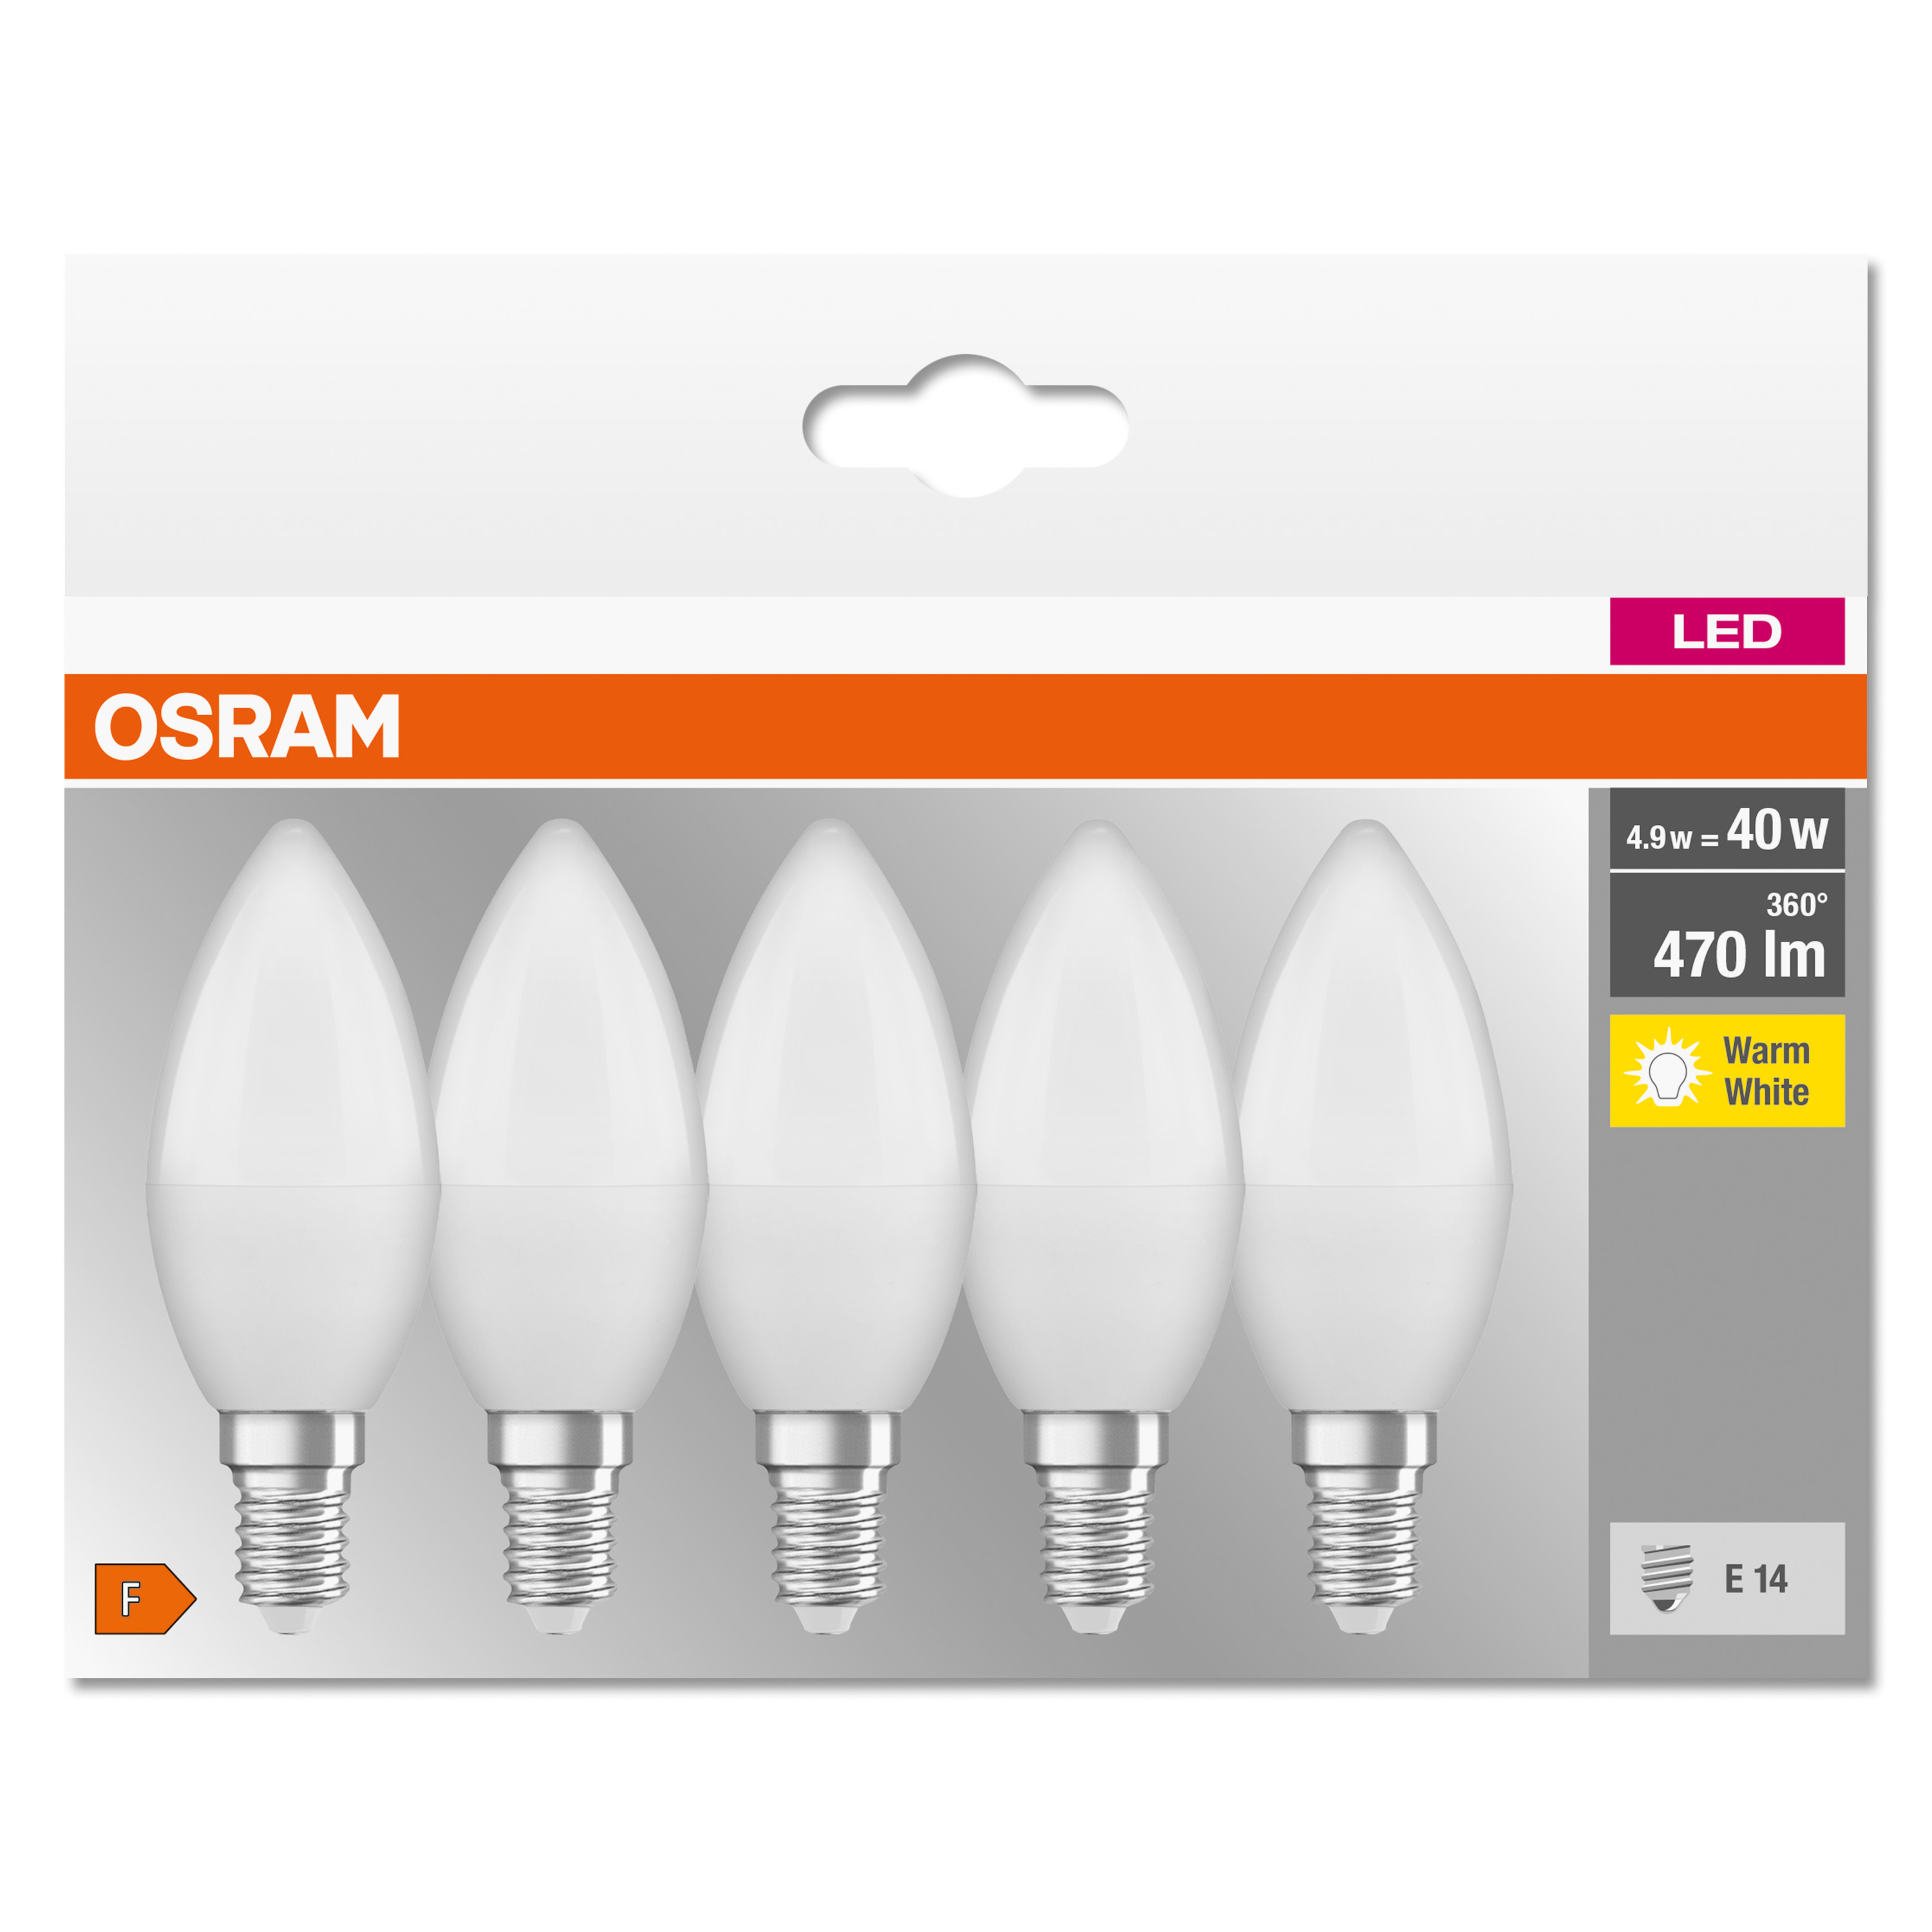 OSRAM  Warmweiß BASE B CLASSIC lumen 470 LED LED Lampe